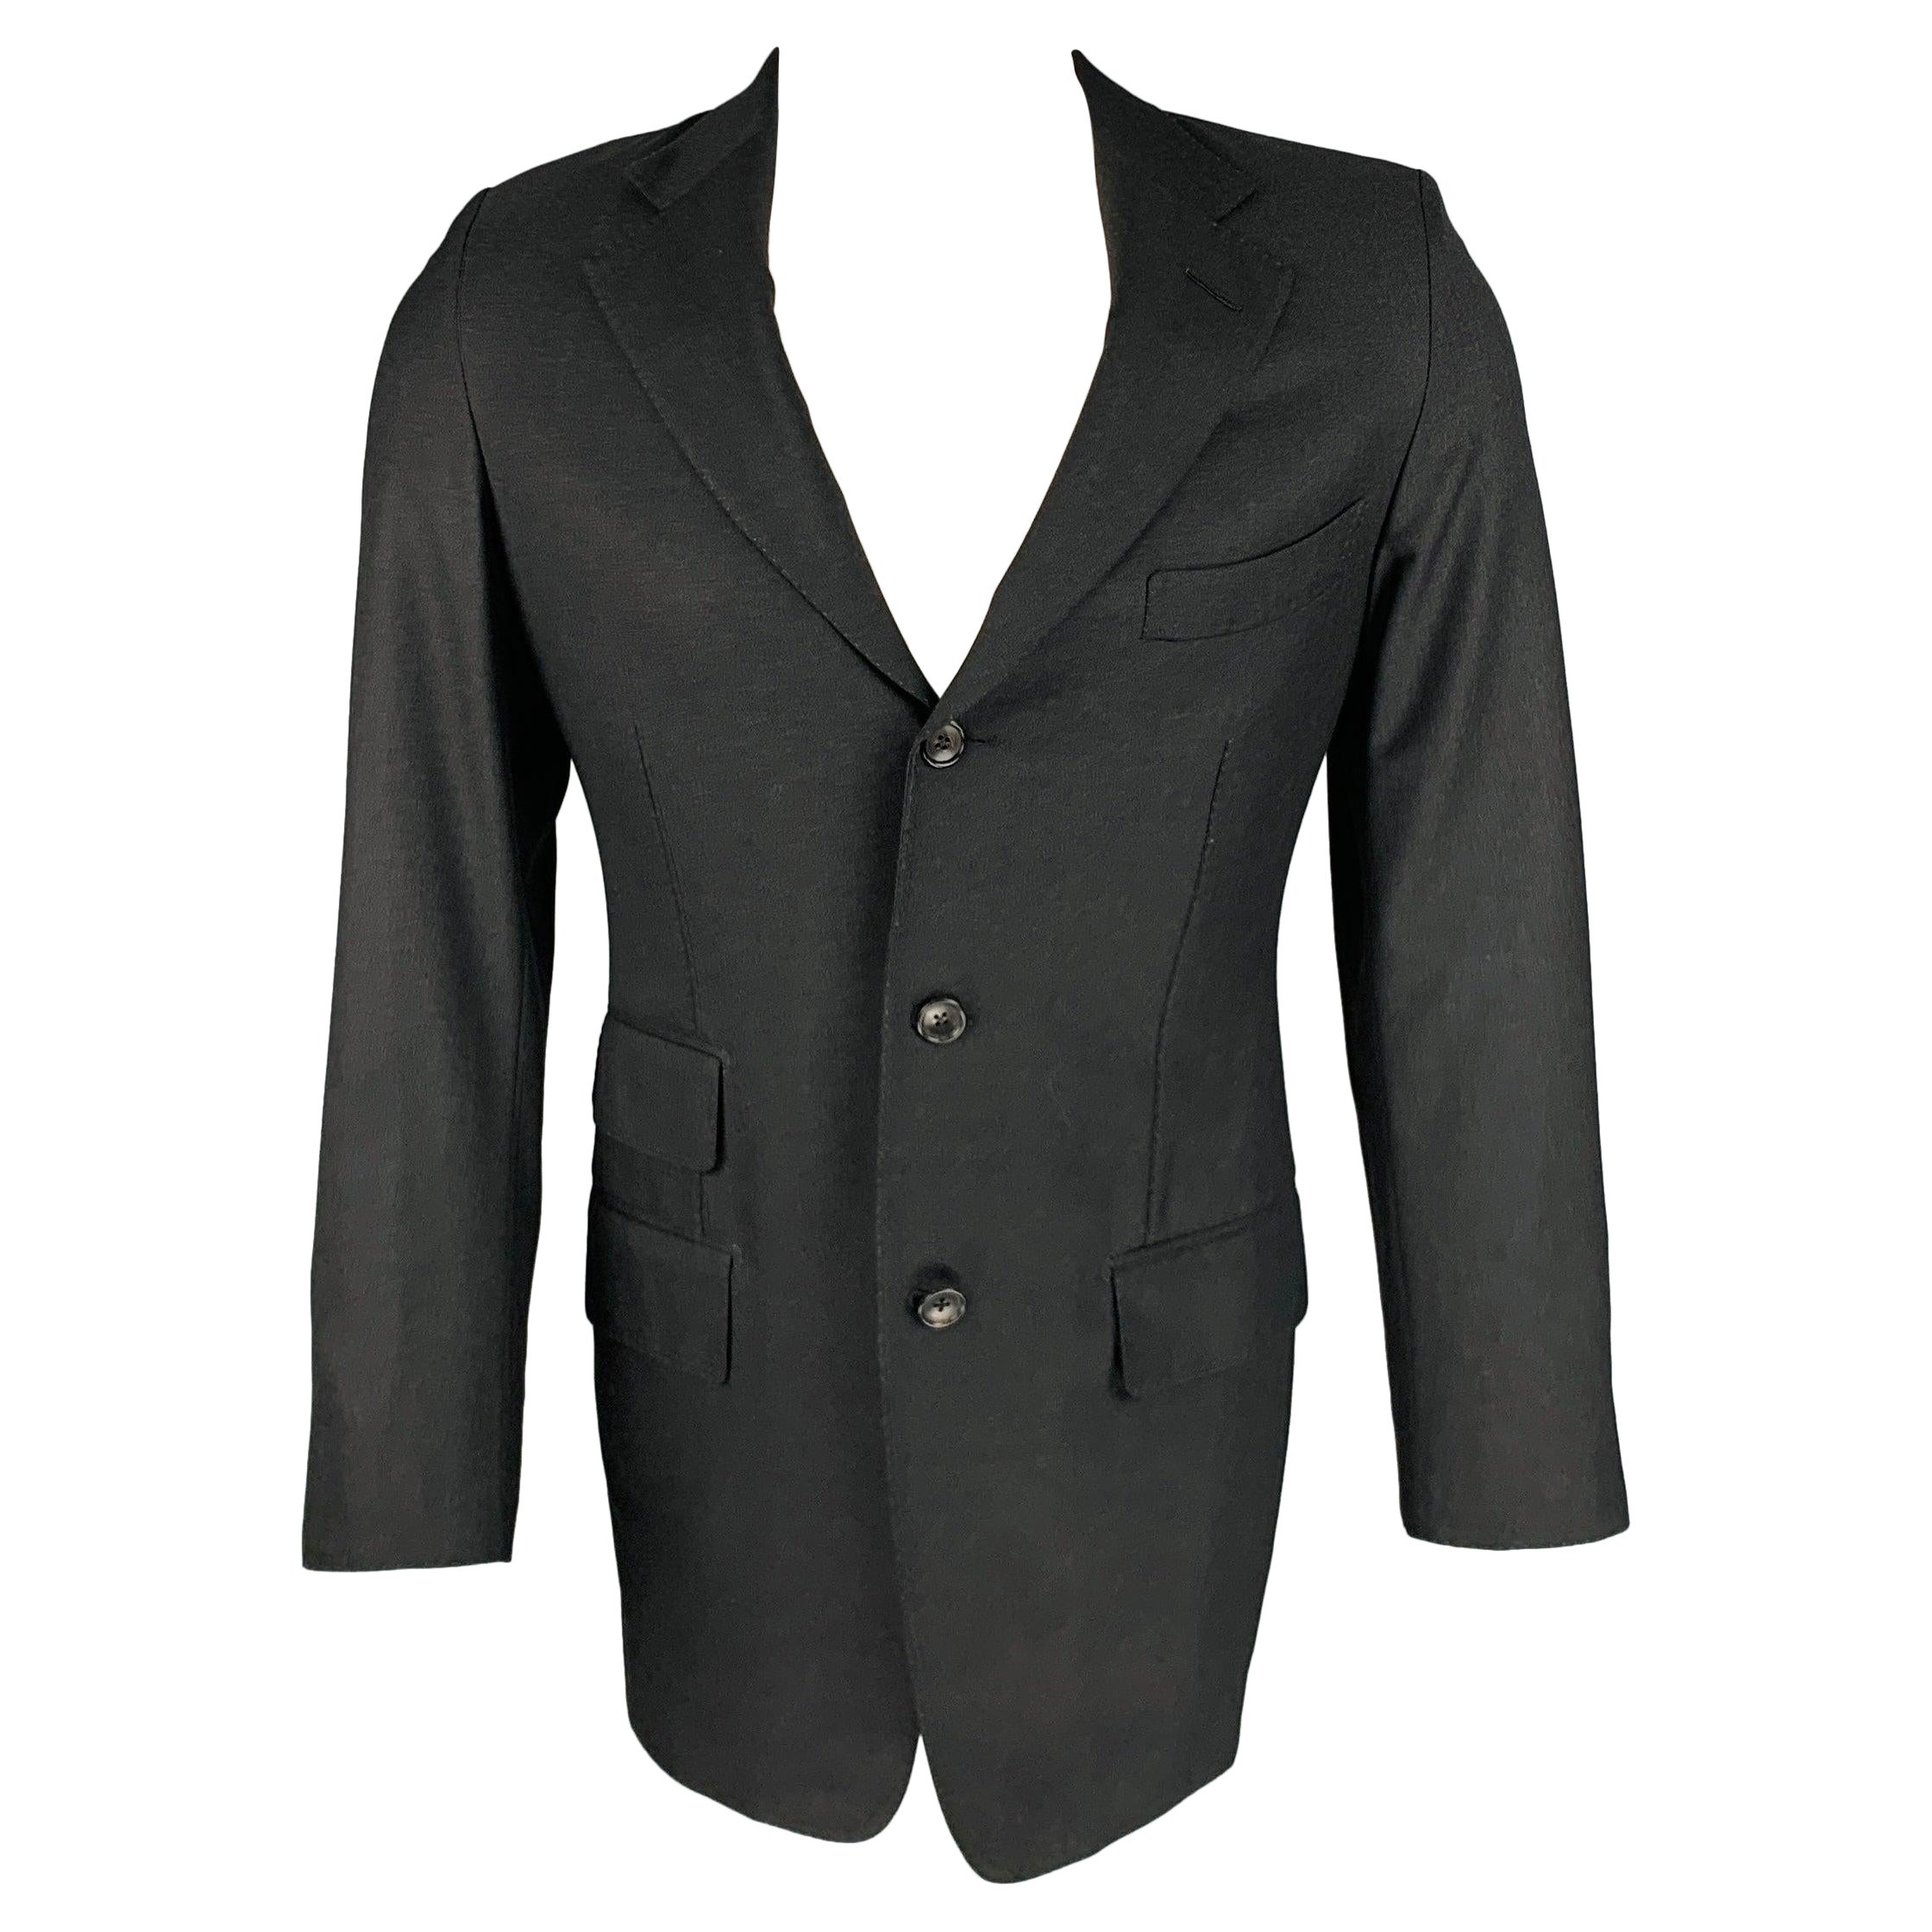 TOM FORD Size 38 Grey Wool Peak Lapel Sport Coat For Sale